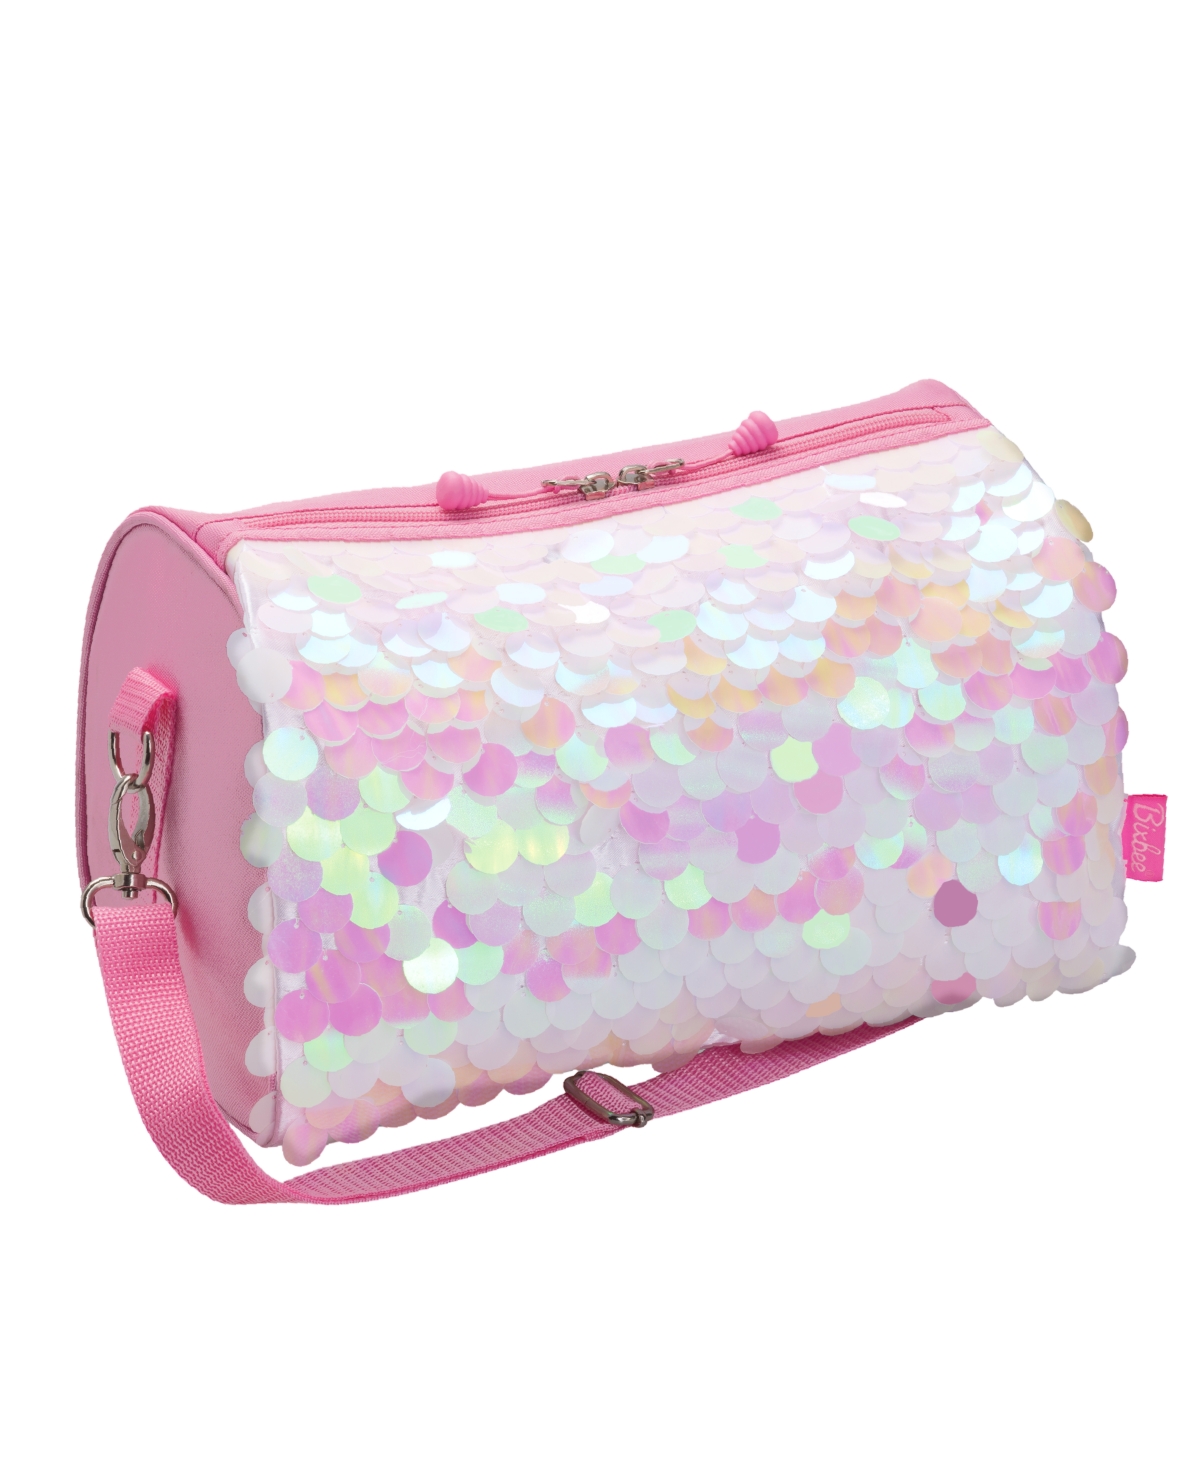 Pop Star Duffle Bag - Pink